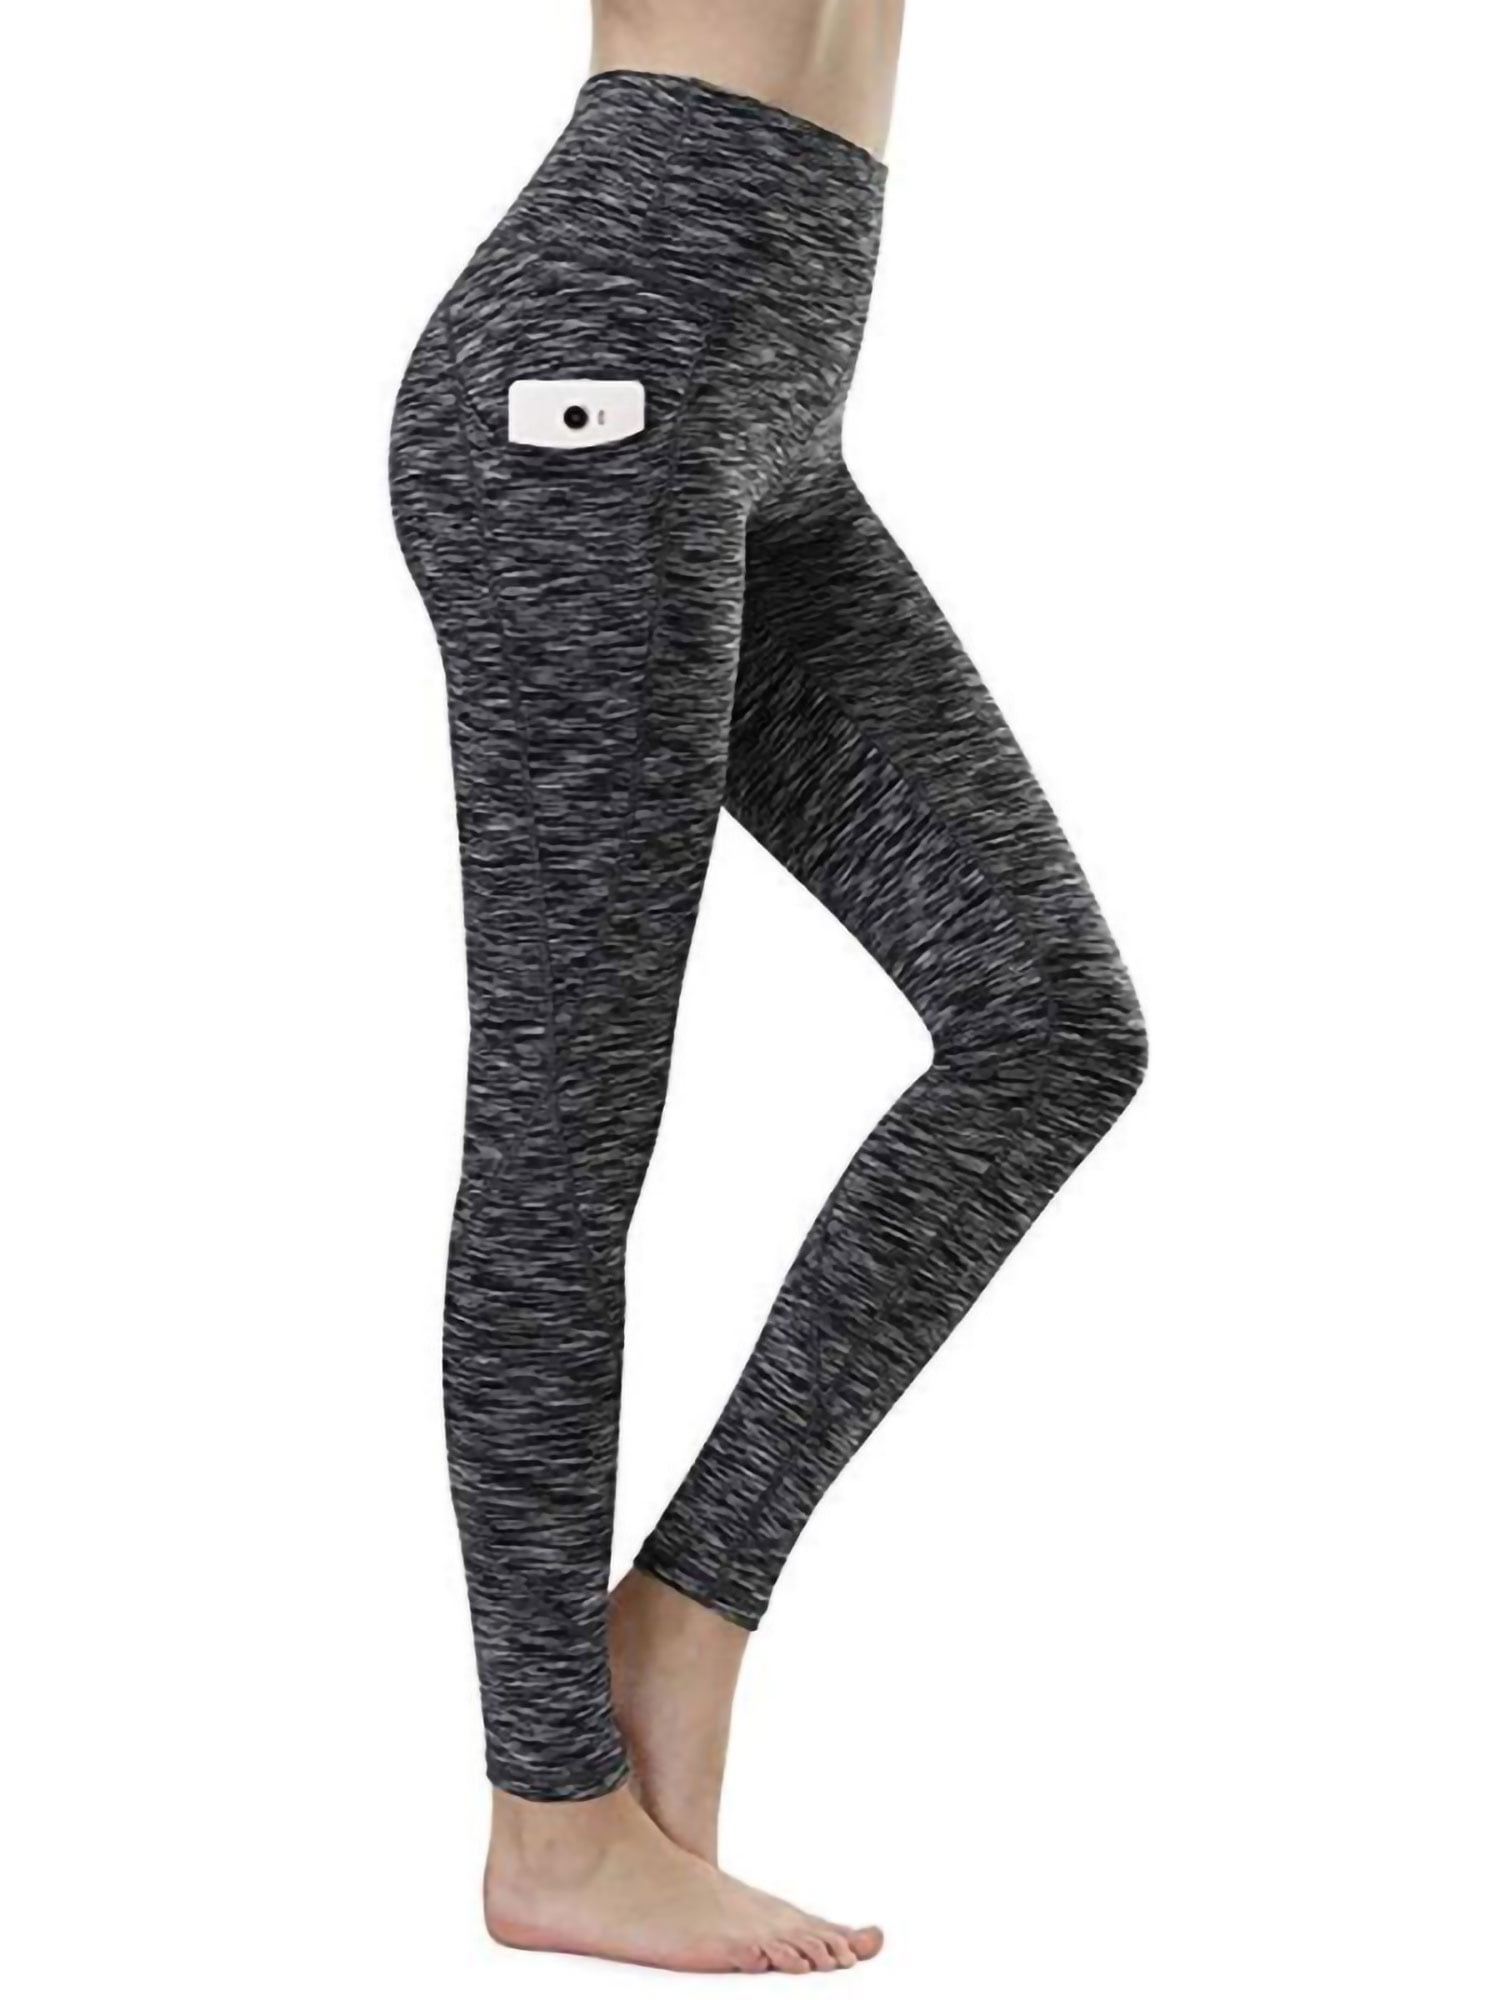 IKEEP Womens High Waist Yoga Shorts 8 /5 /2 Workout Running Shorts with Pockets for Women 